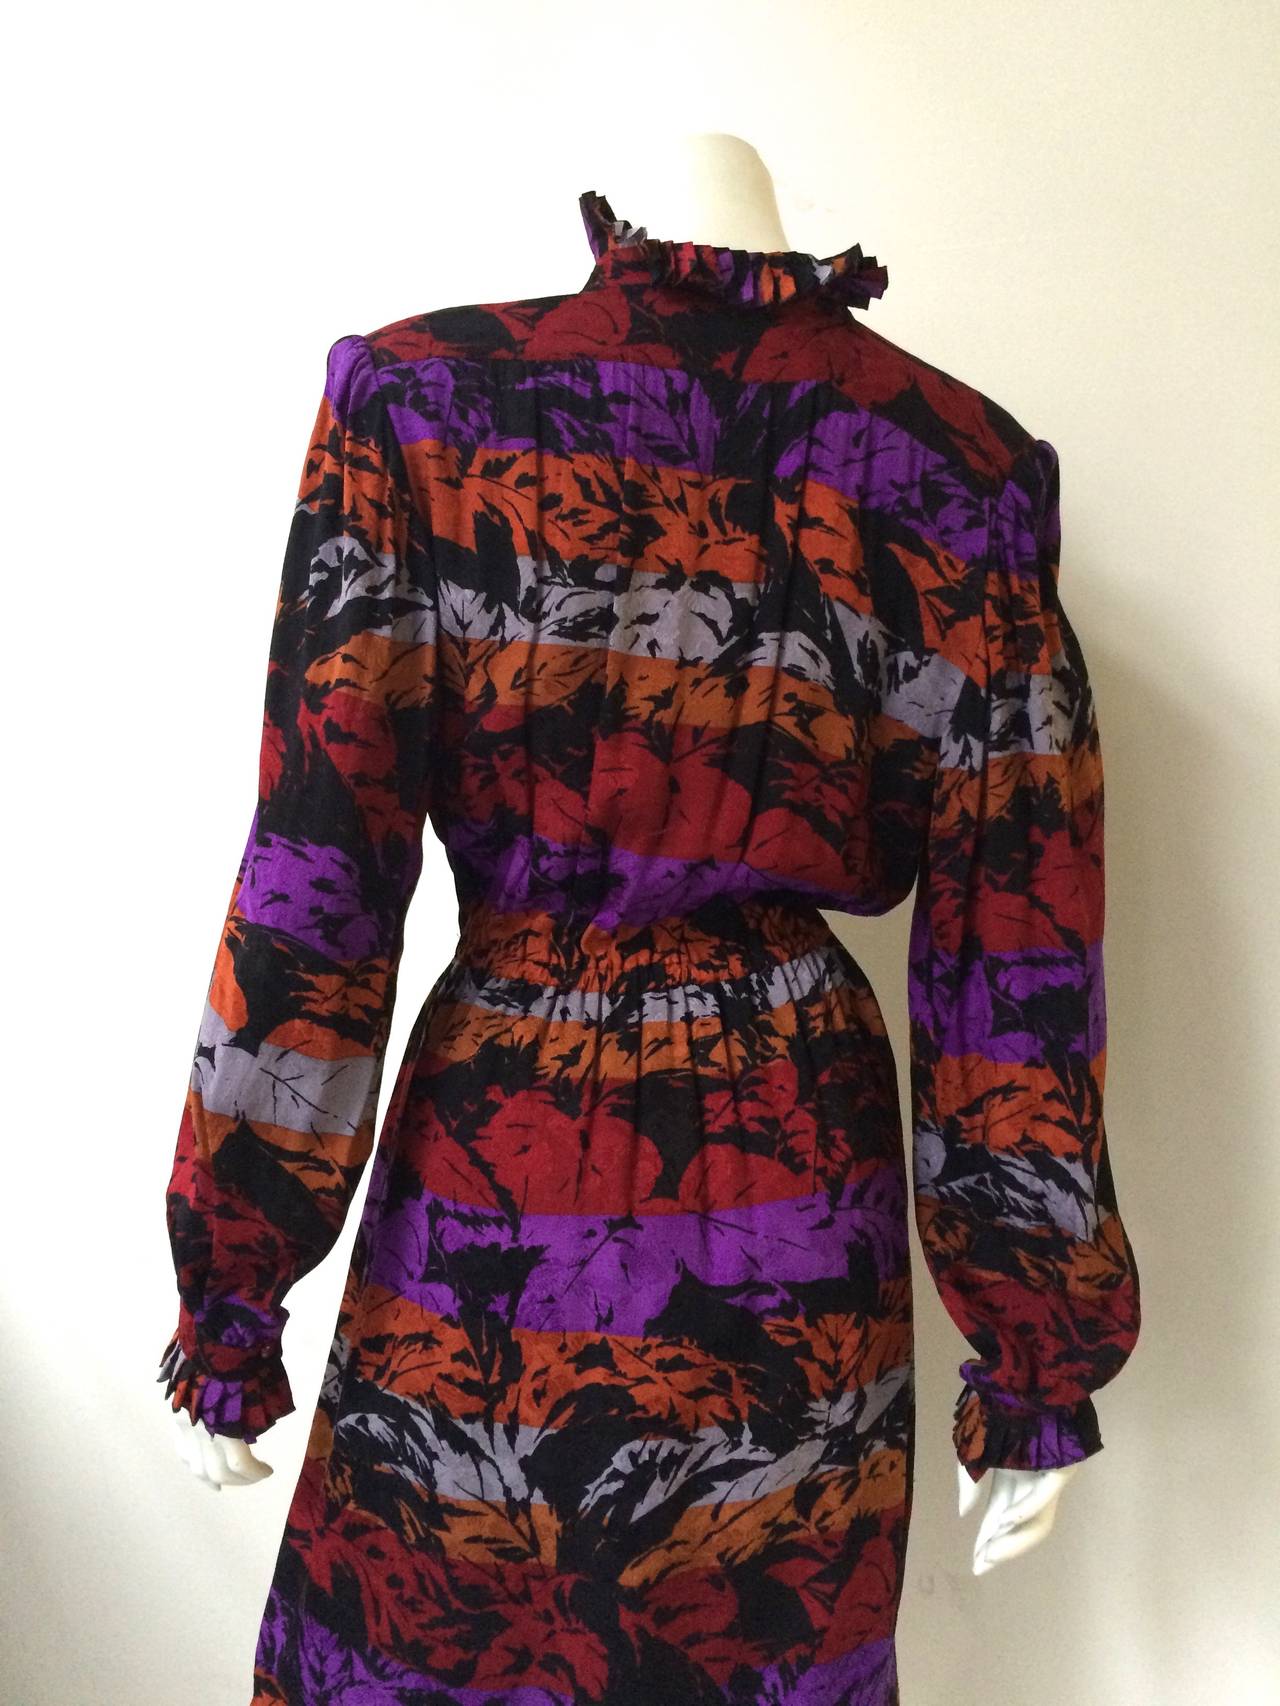 Nina Ricci Boutique Paris 70s silk dress size 4/6. 3